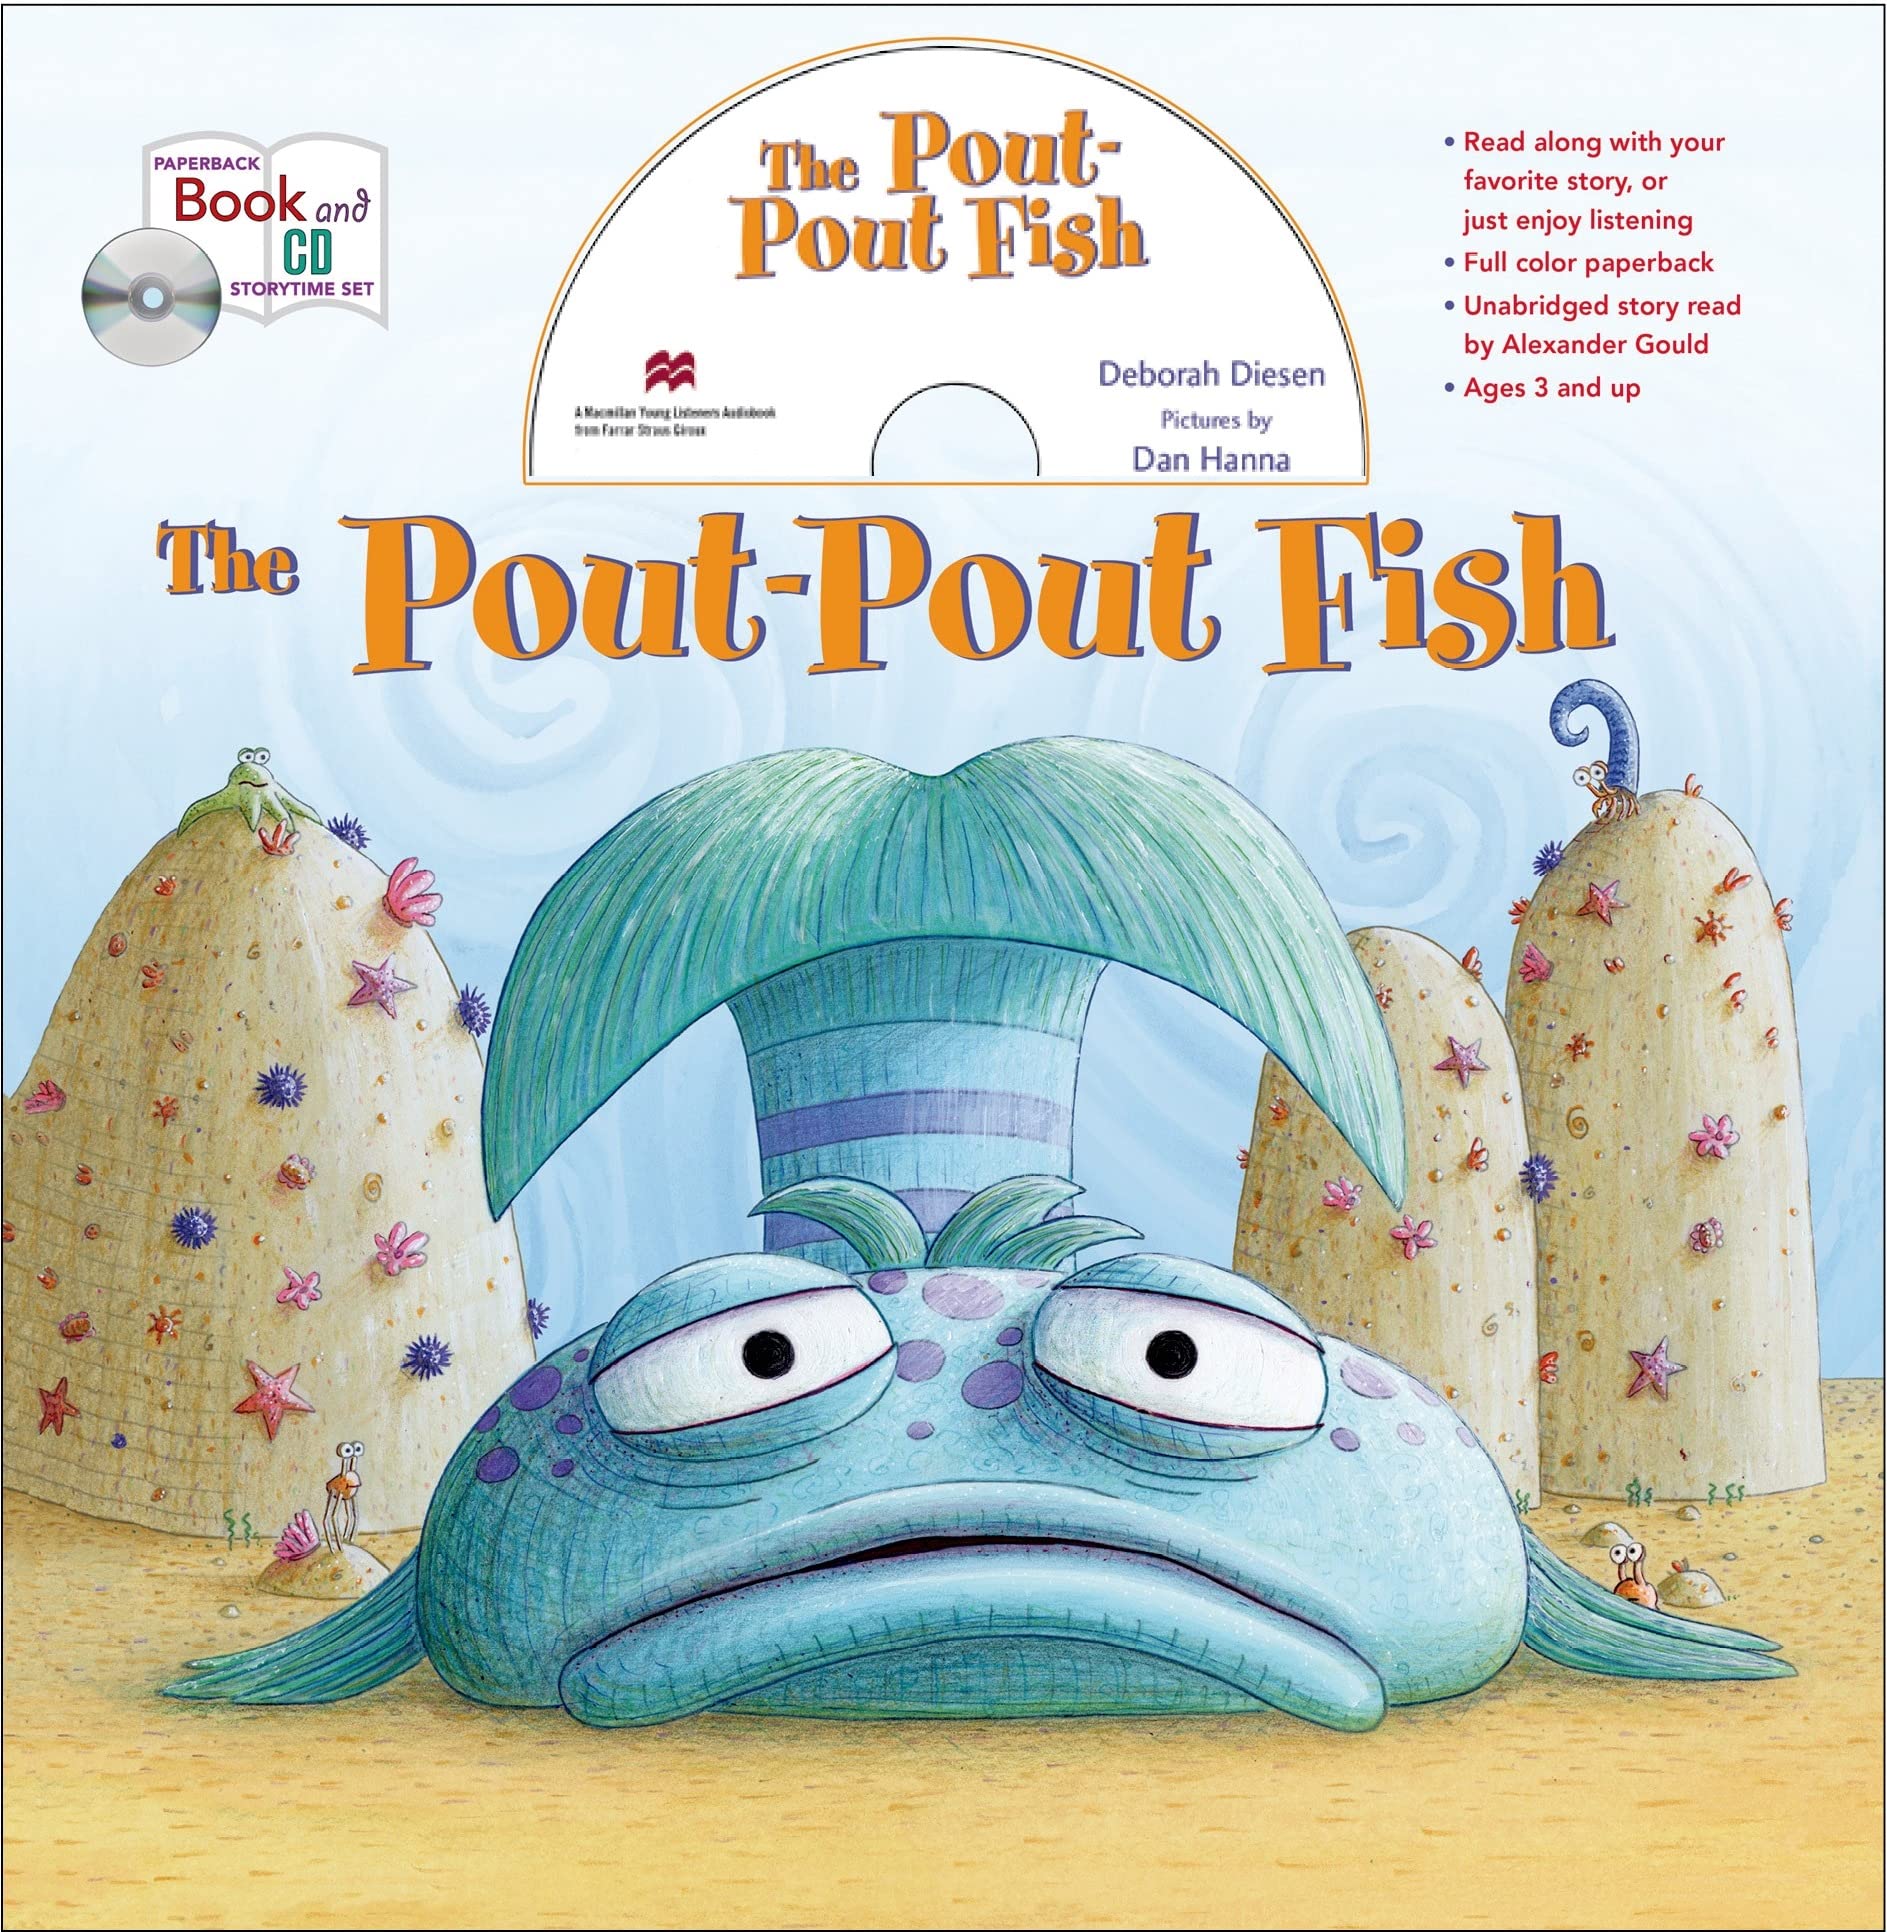 The Pout-Pout Fish book and CD storytime set (A Pout-Pout Fish Adventure)